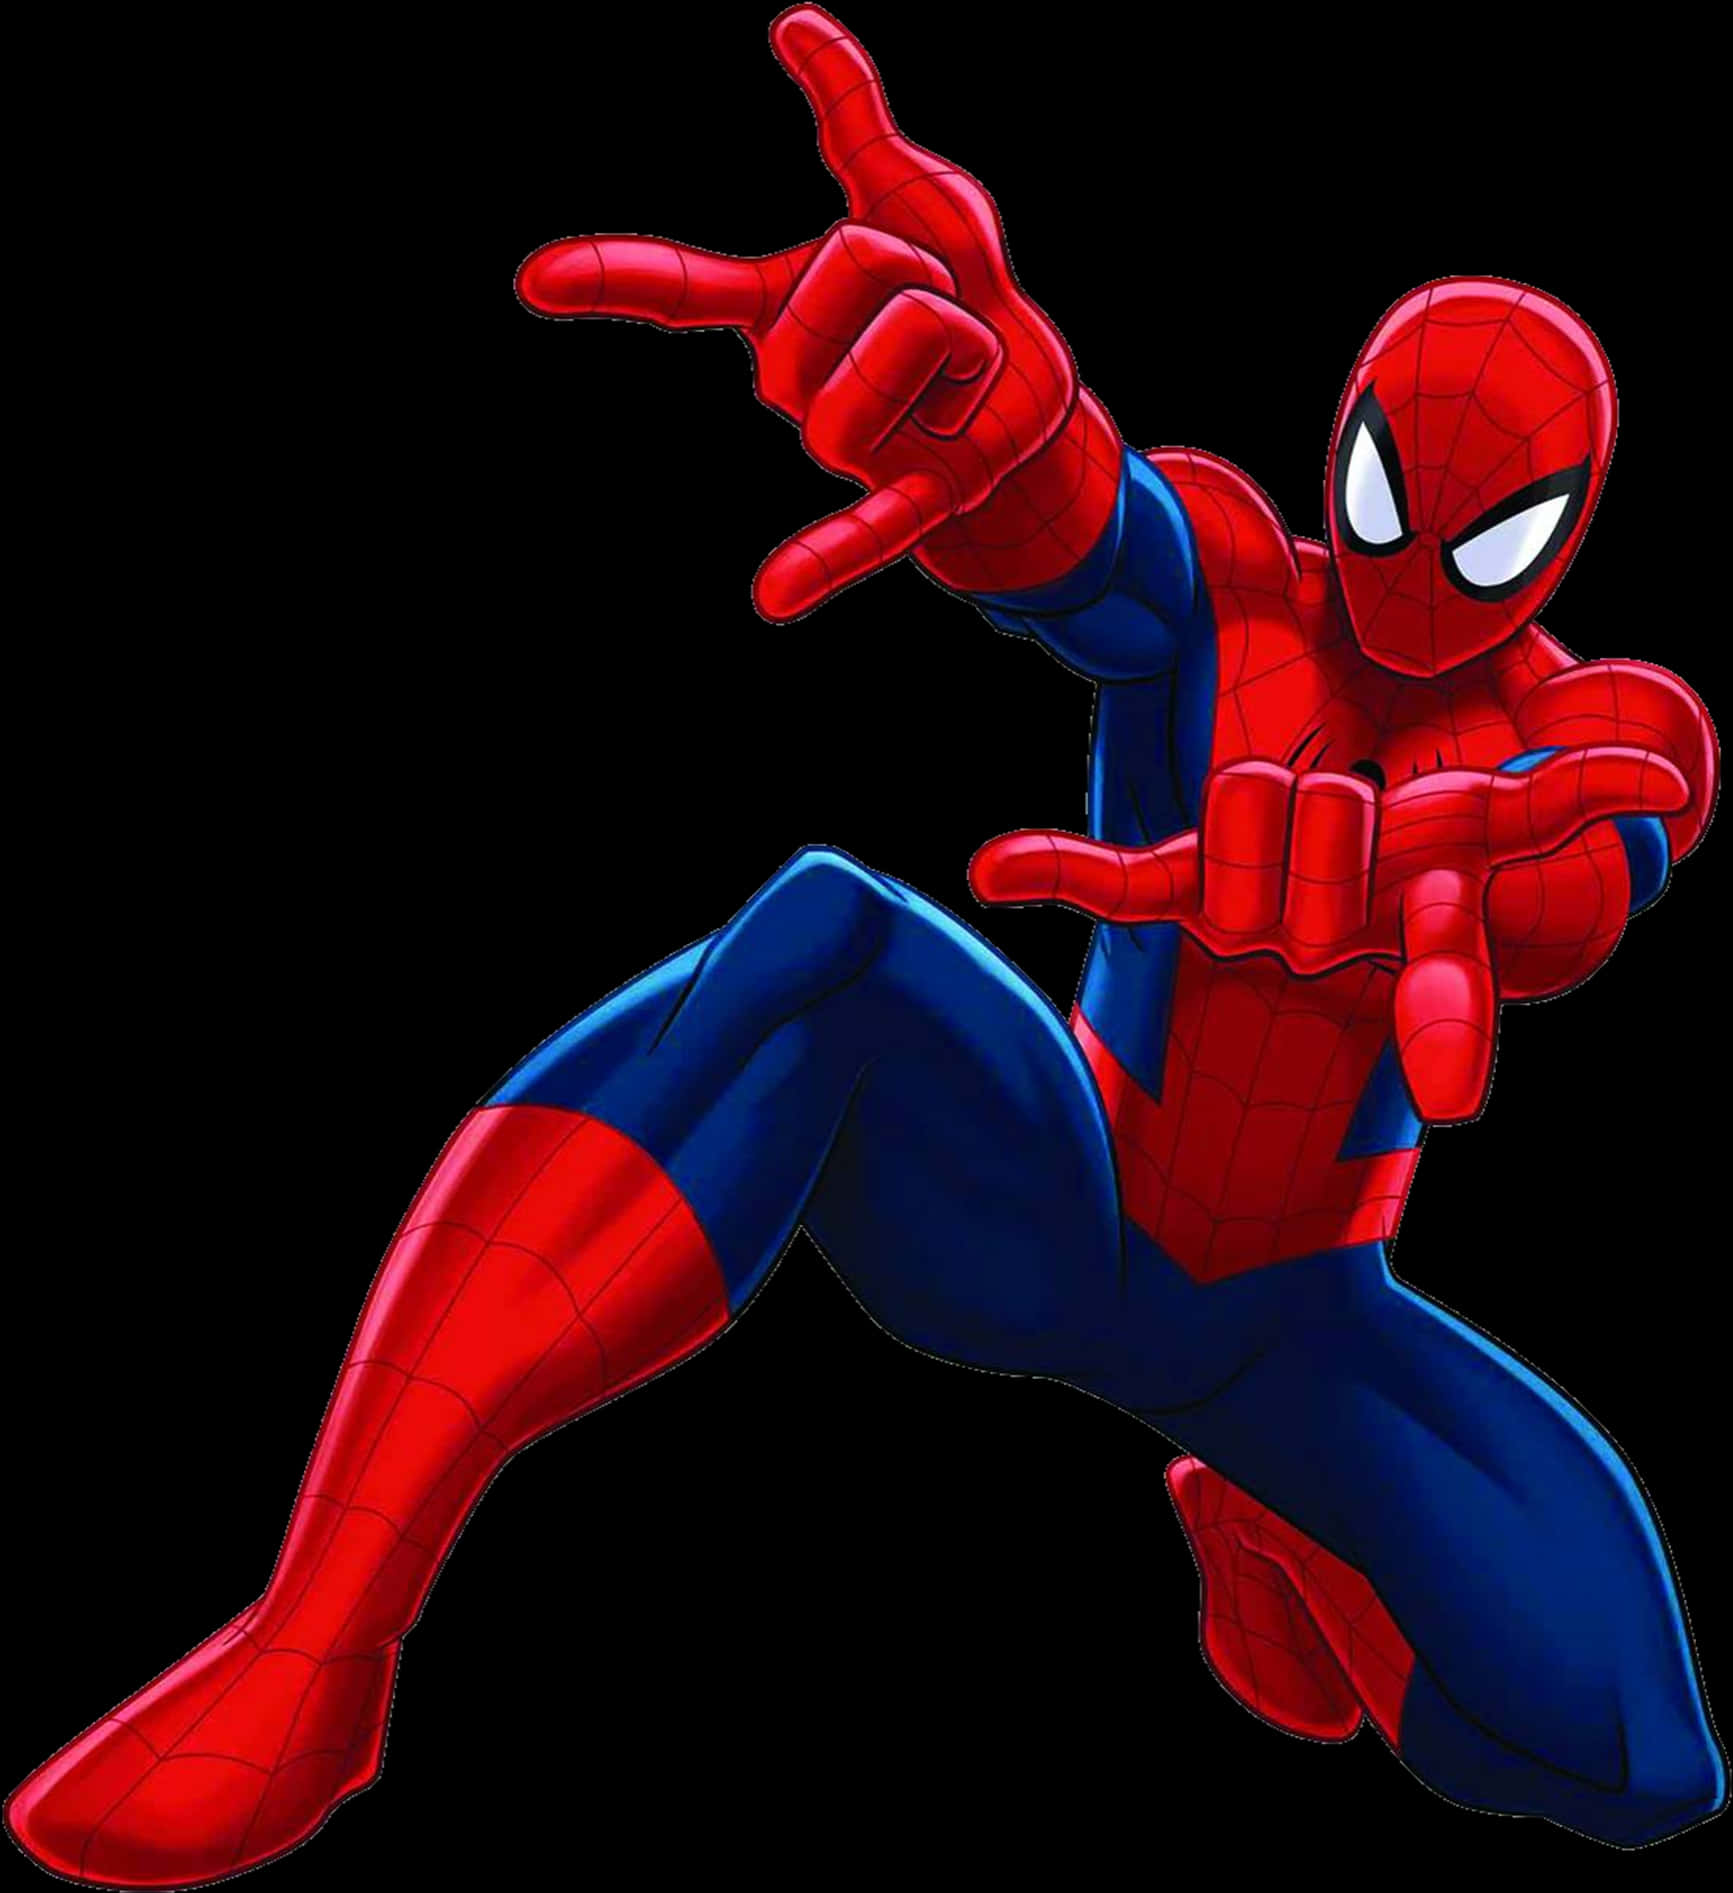 Spiderman Web Shooting Pose PNG image